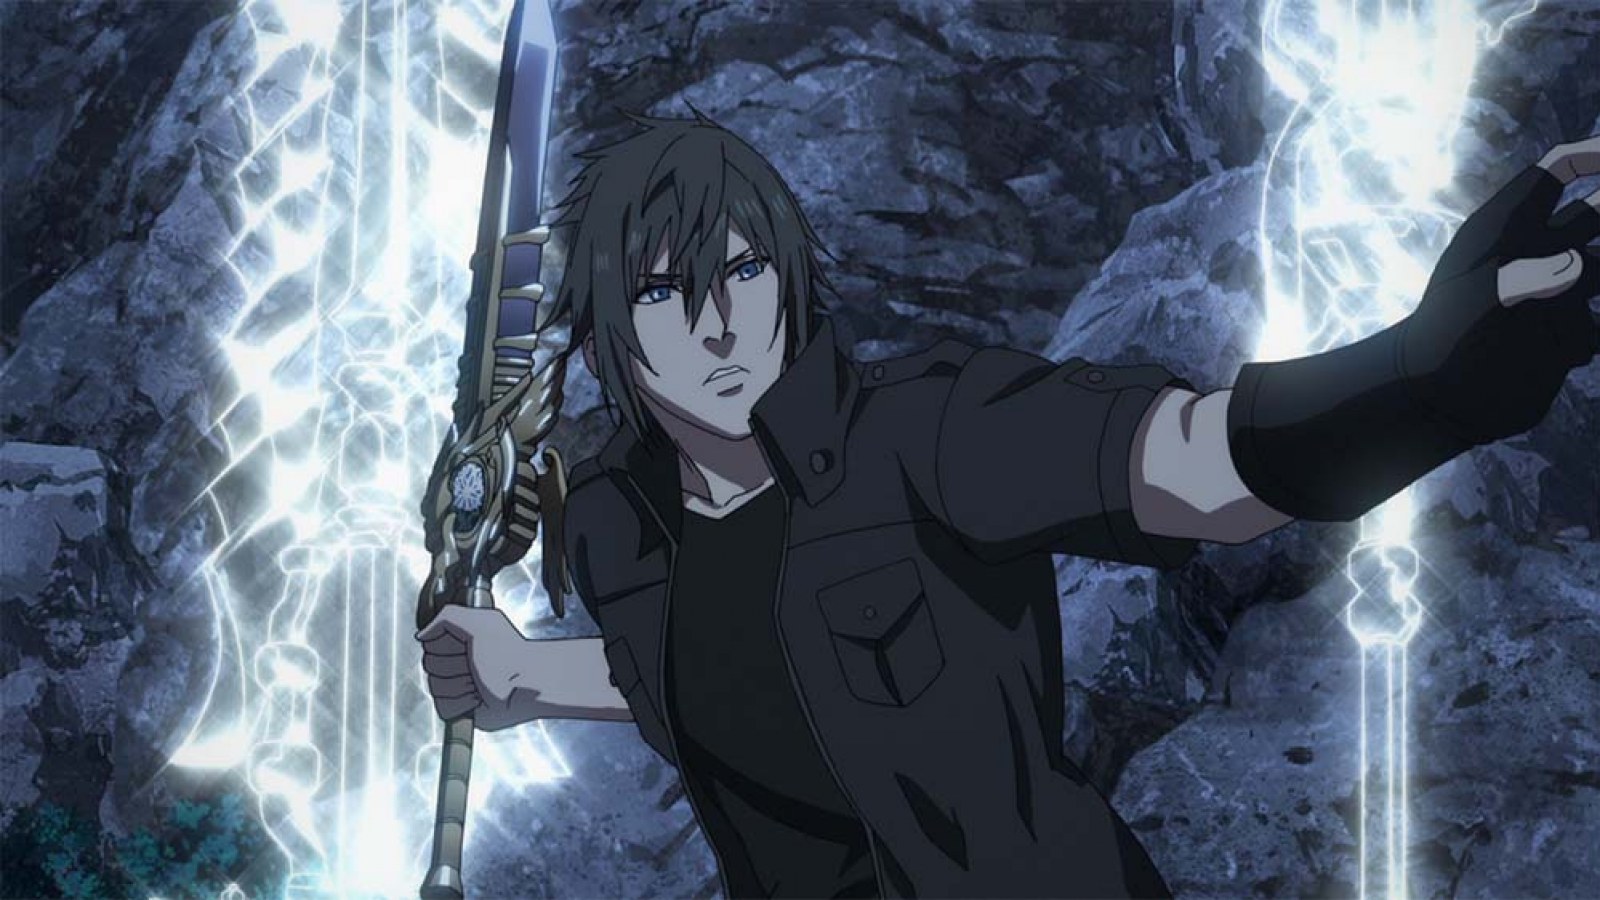 Brotherhood Final Fantasy 15: Square Enix announces anime OVA tie-in series  for